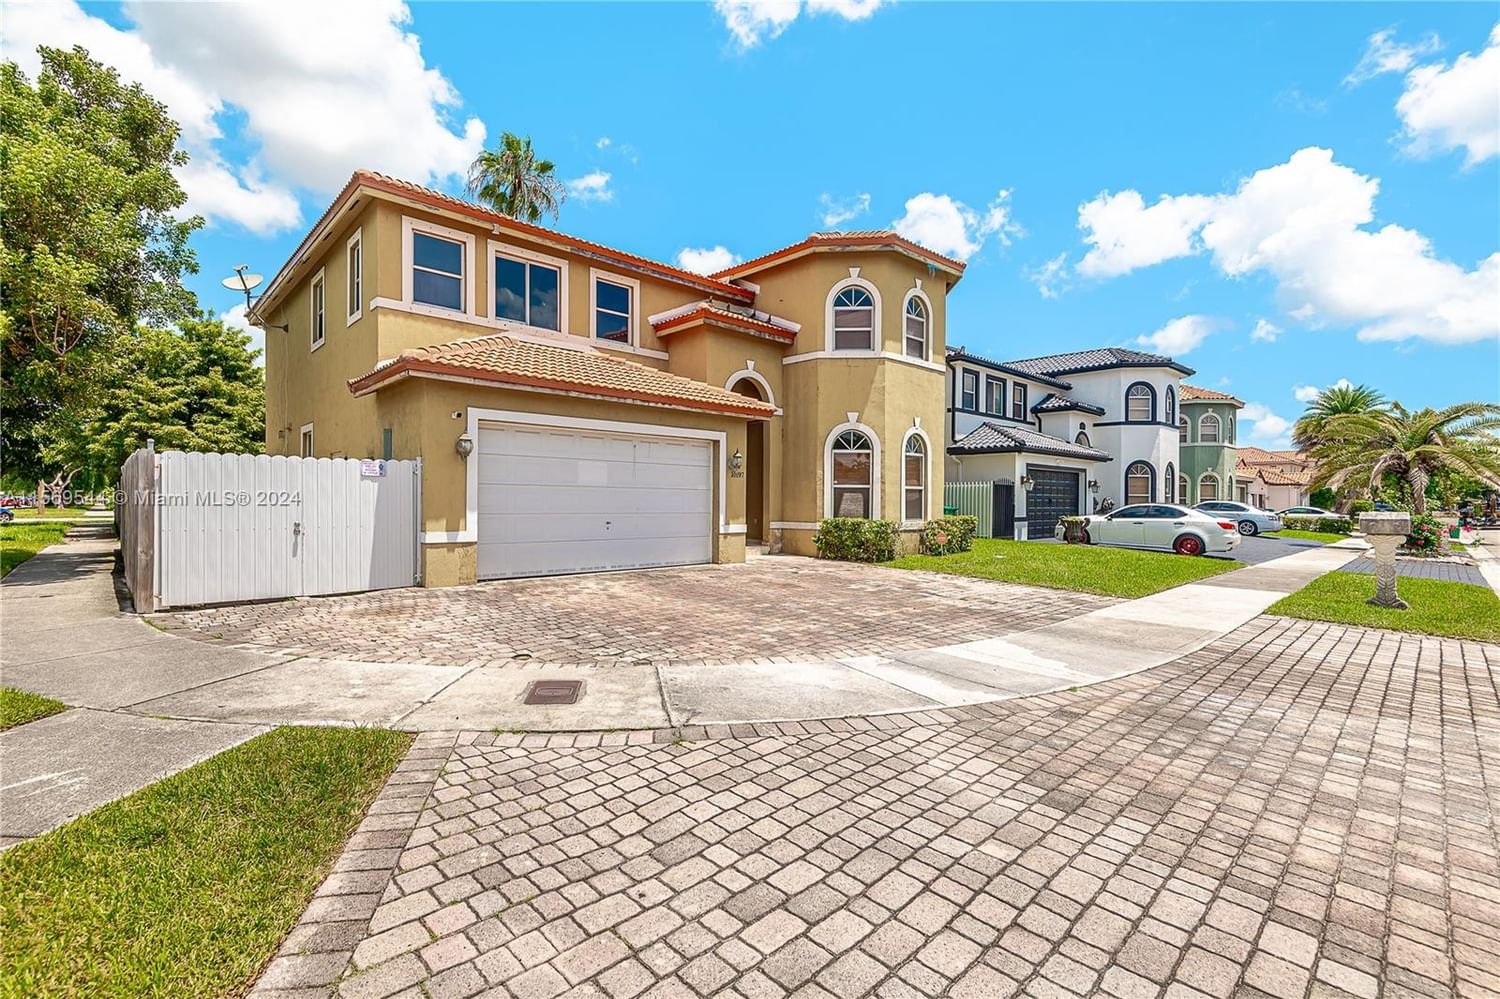 Real estate property located at 10197 26th Ter, Miami-Dade County, GAVICAR HOMES, Miami, FL